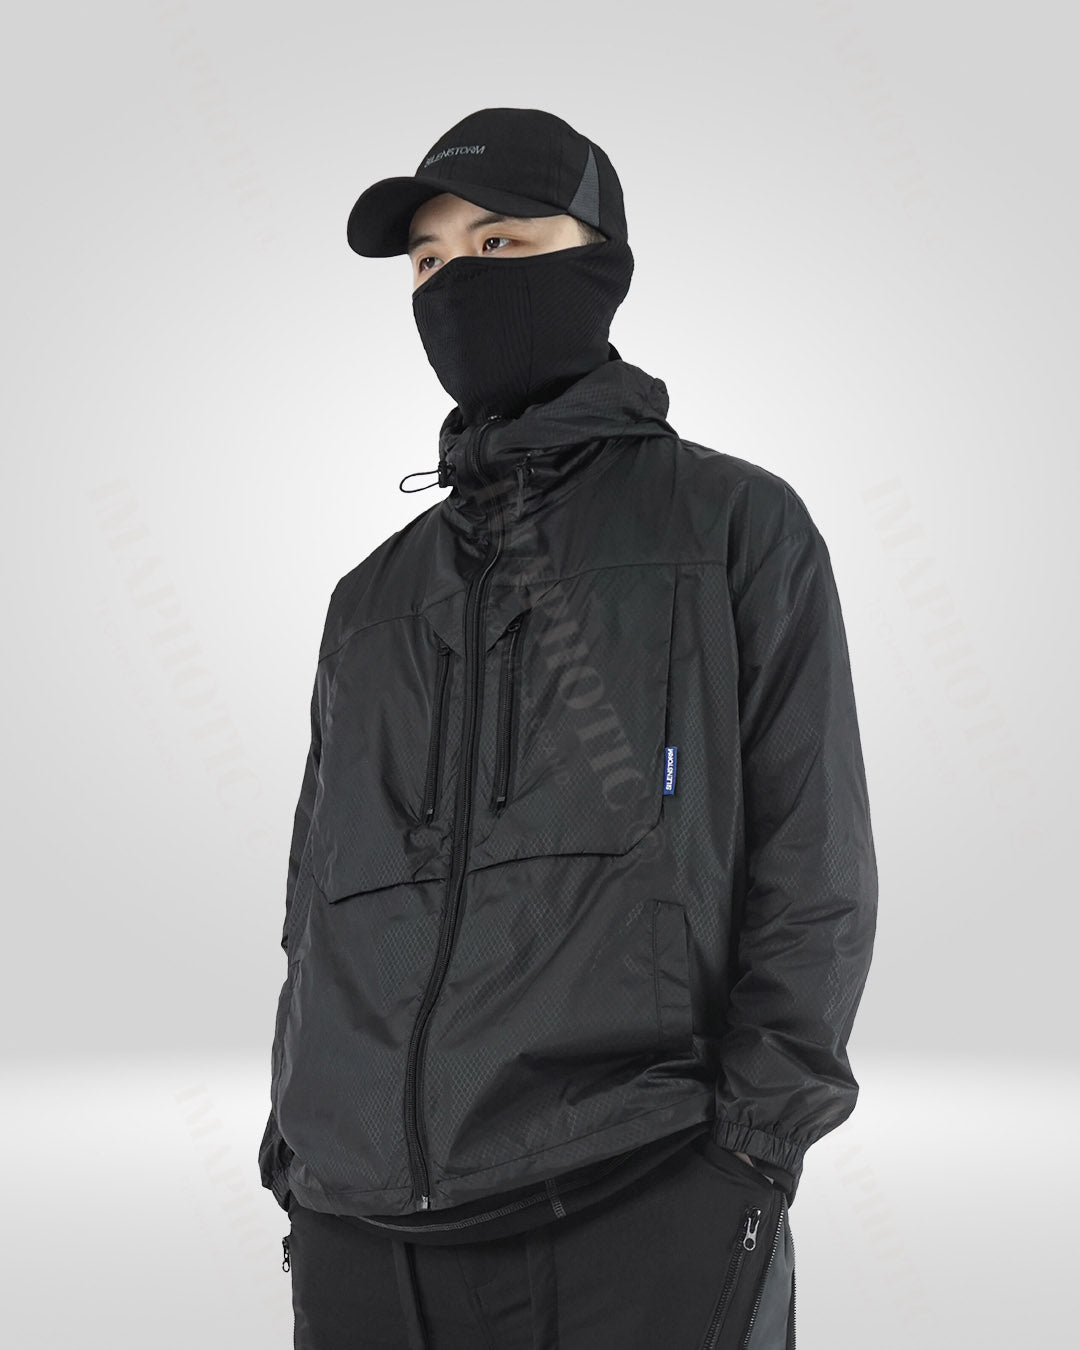 Black Sun Protection Lightweight Jacket - Men's UV Resistant Outdoor Gear